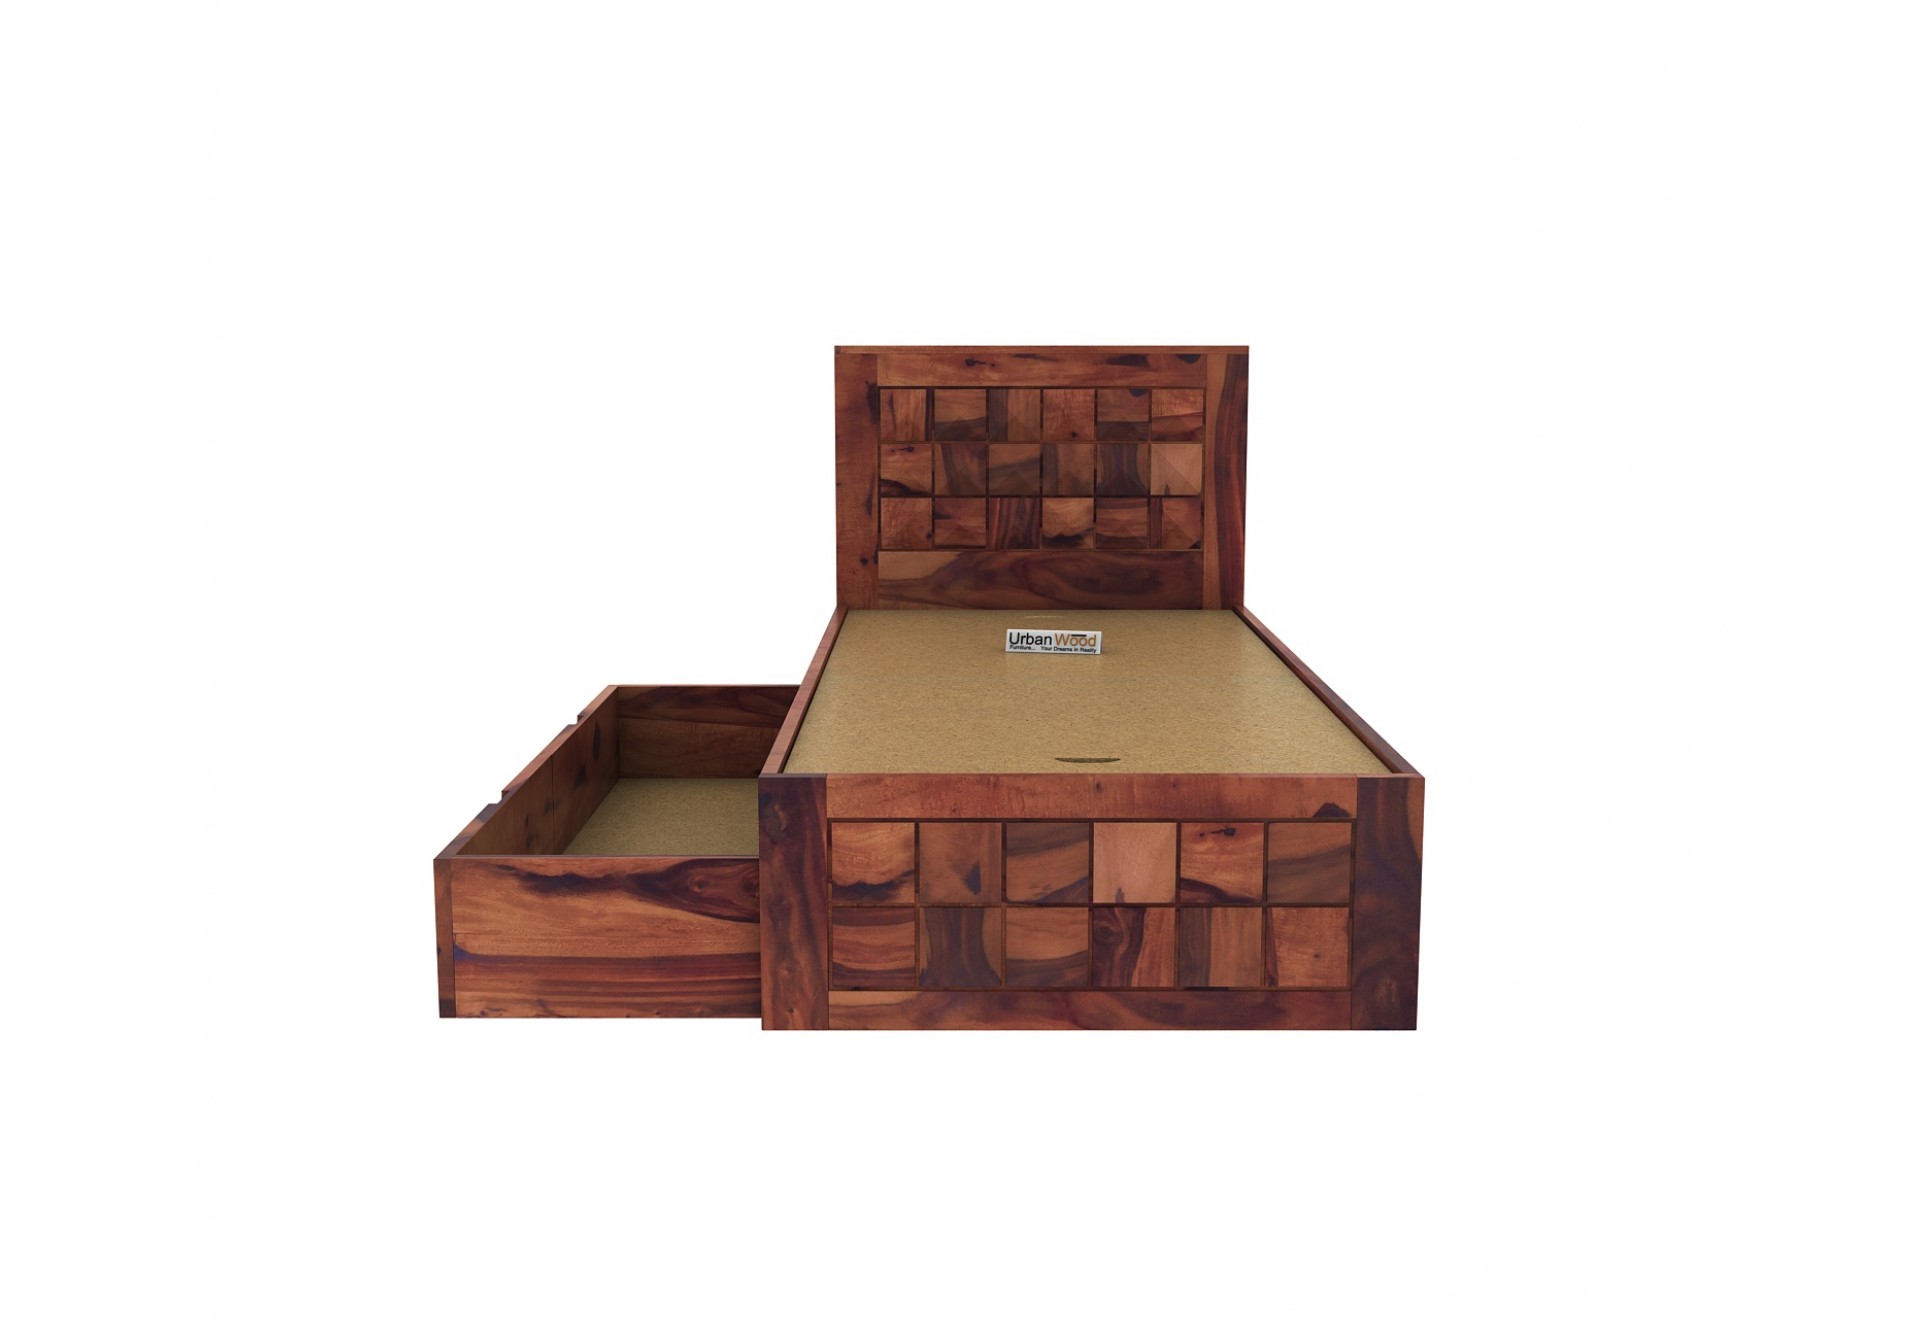 Morgana Single Bed With Drawer Storage ( Teak Finish )